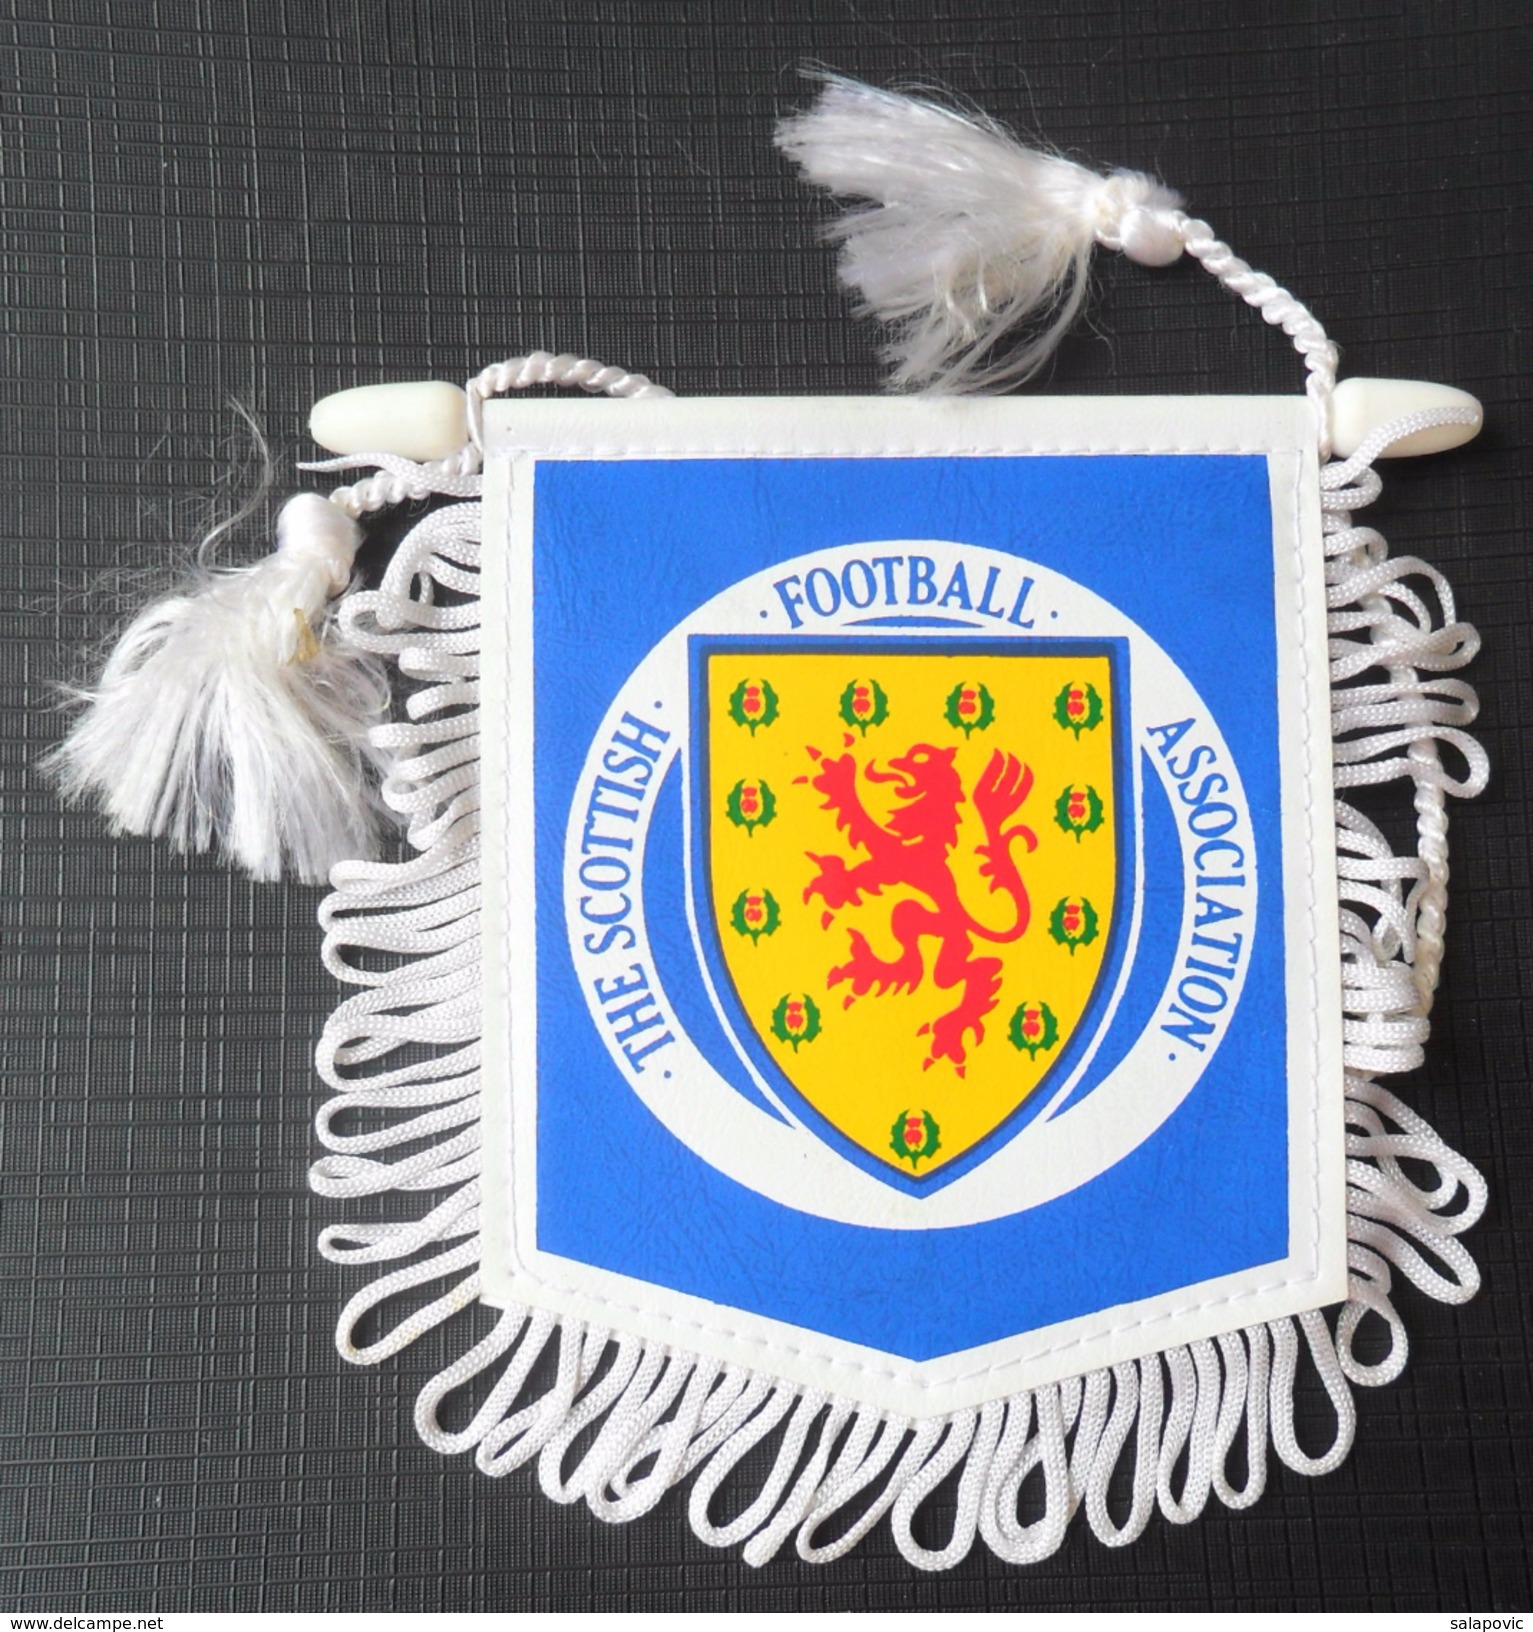 Scottish Football Association FOOTBALL CLUB, SOCCER / FUTBOL / CALCIO OLD PENNANT, SPORTS FLAG - Habillement, Souvenirs & Autres